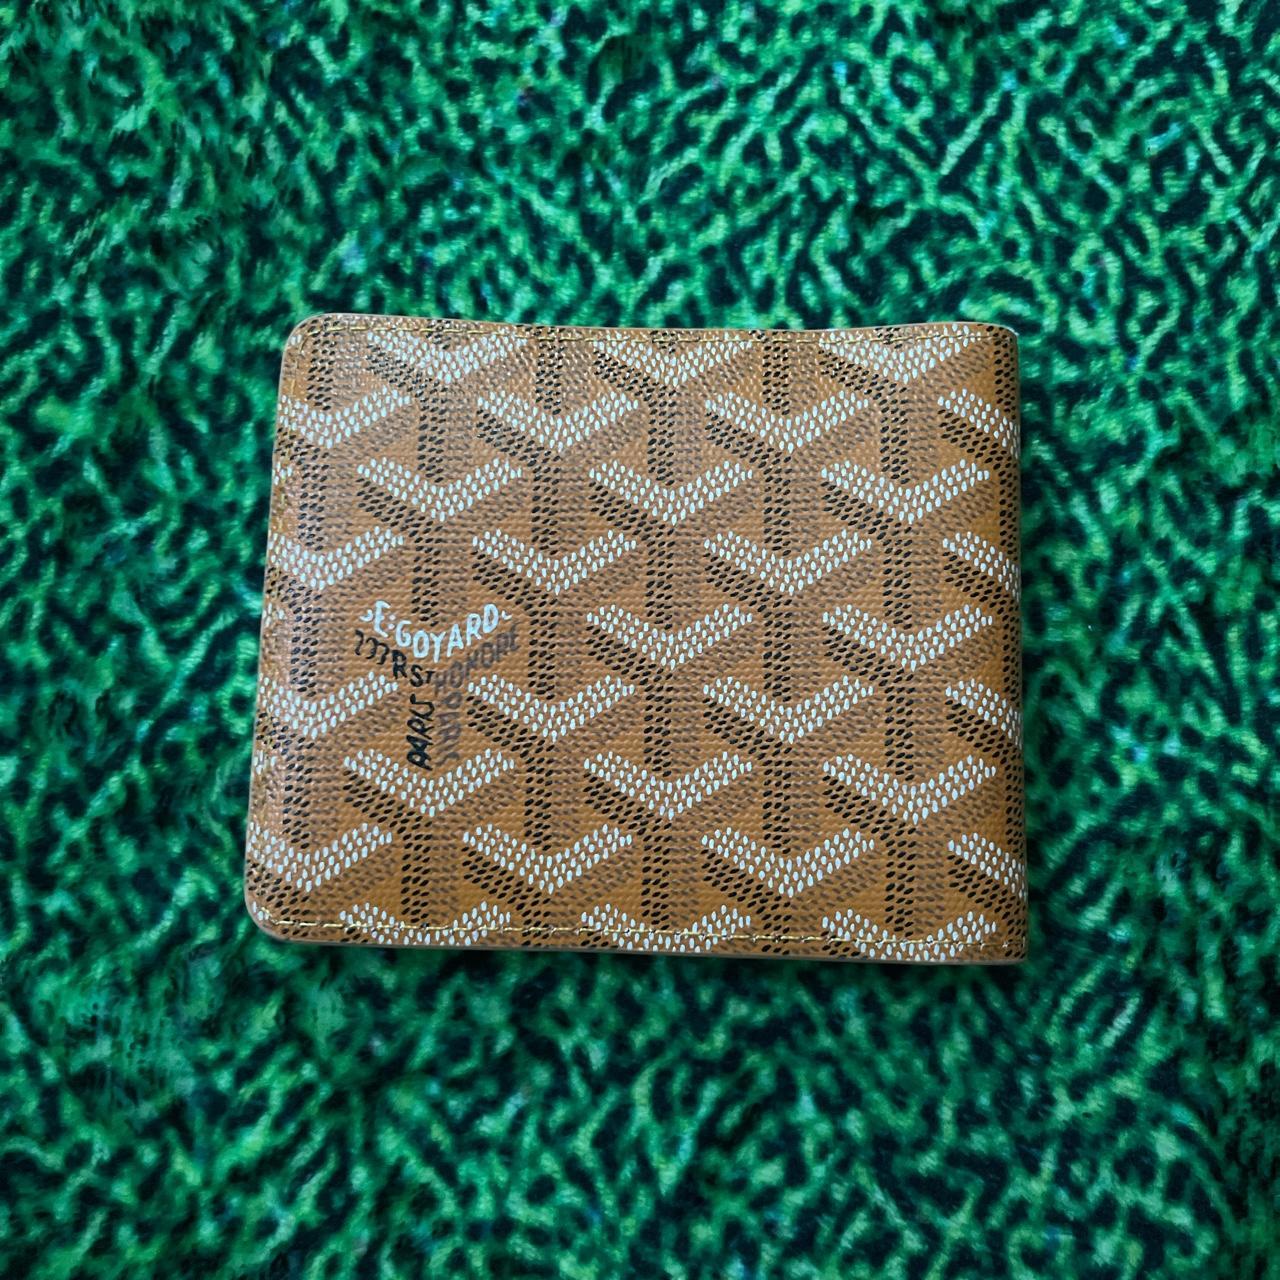 Goyard wallet - Depop